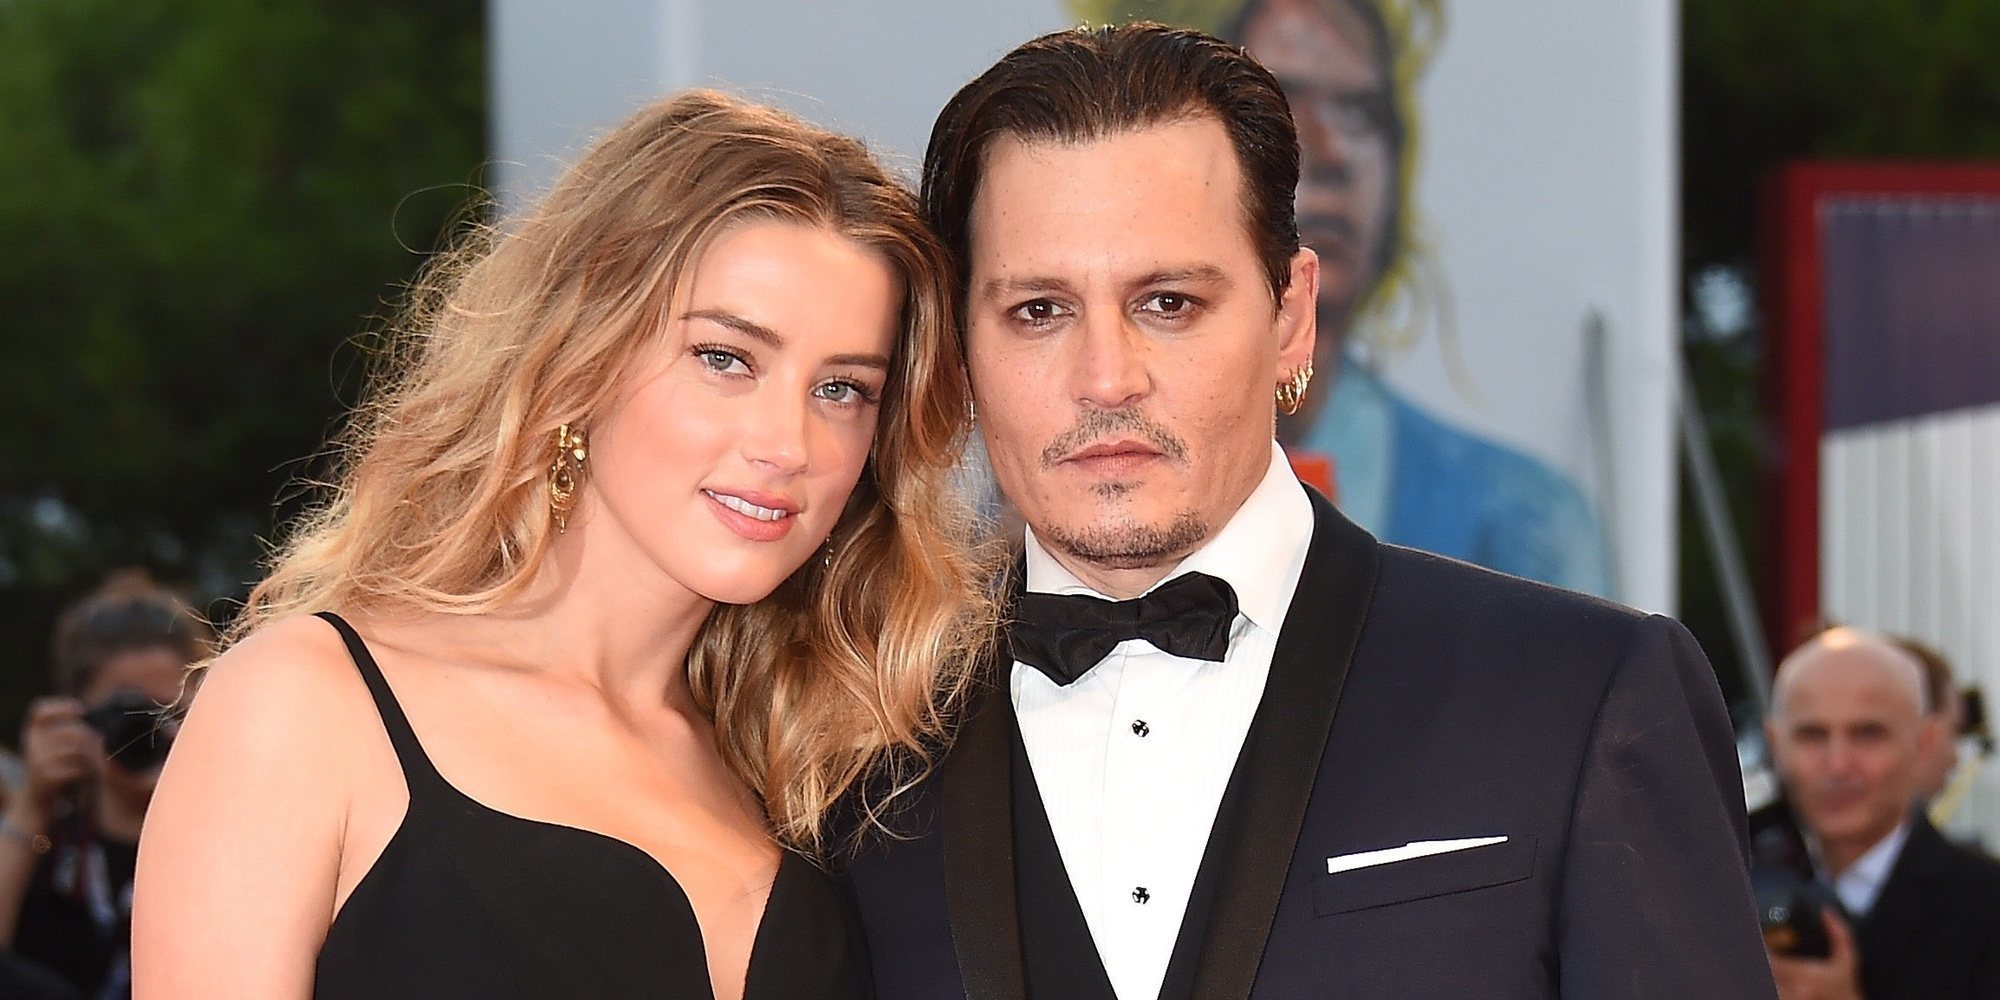 Se desvelan unos impactantes mensajes de Johnny Depp sobre Amber Heard: "Vamos a quemarla"